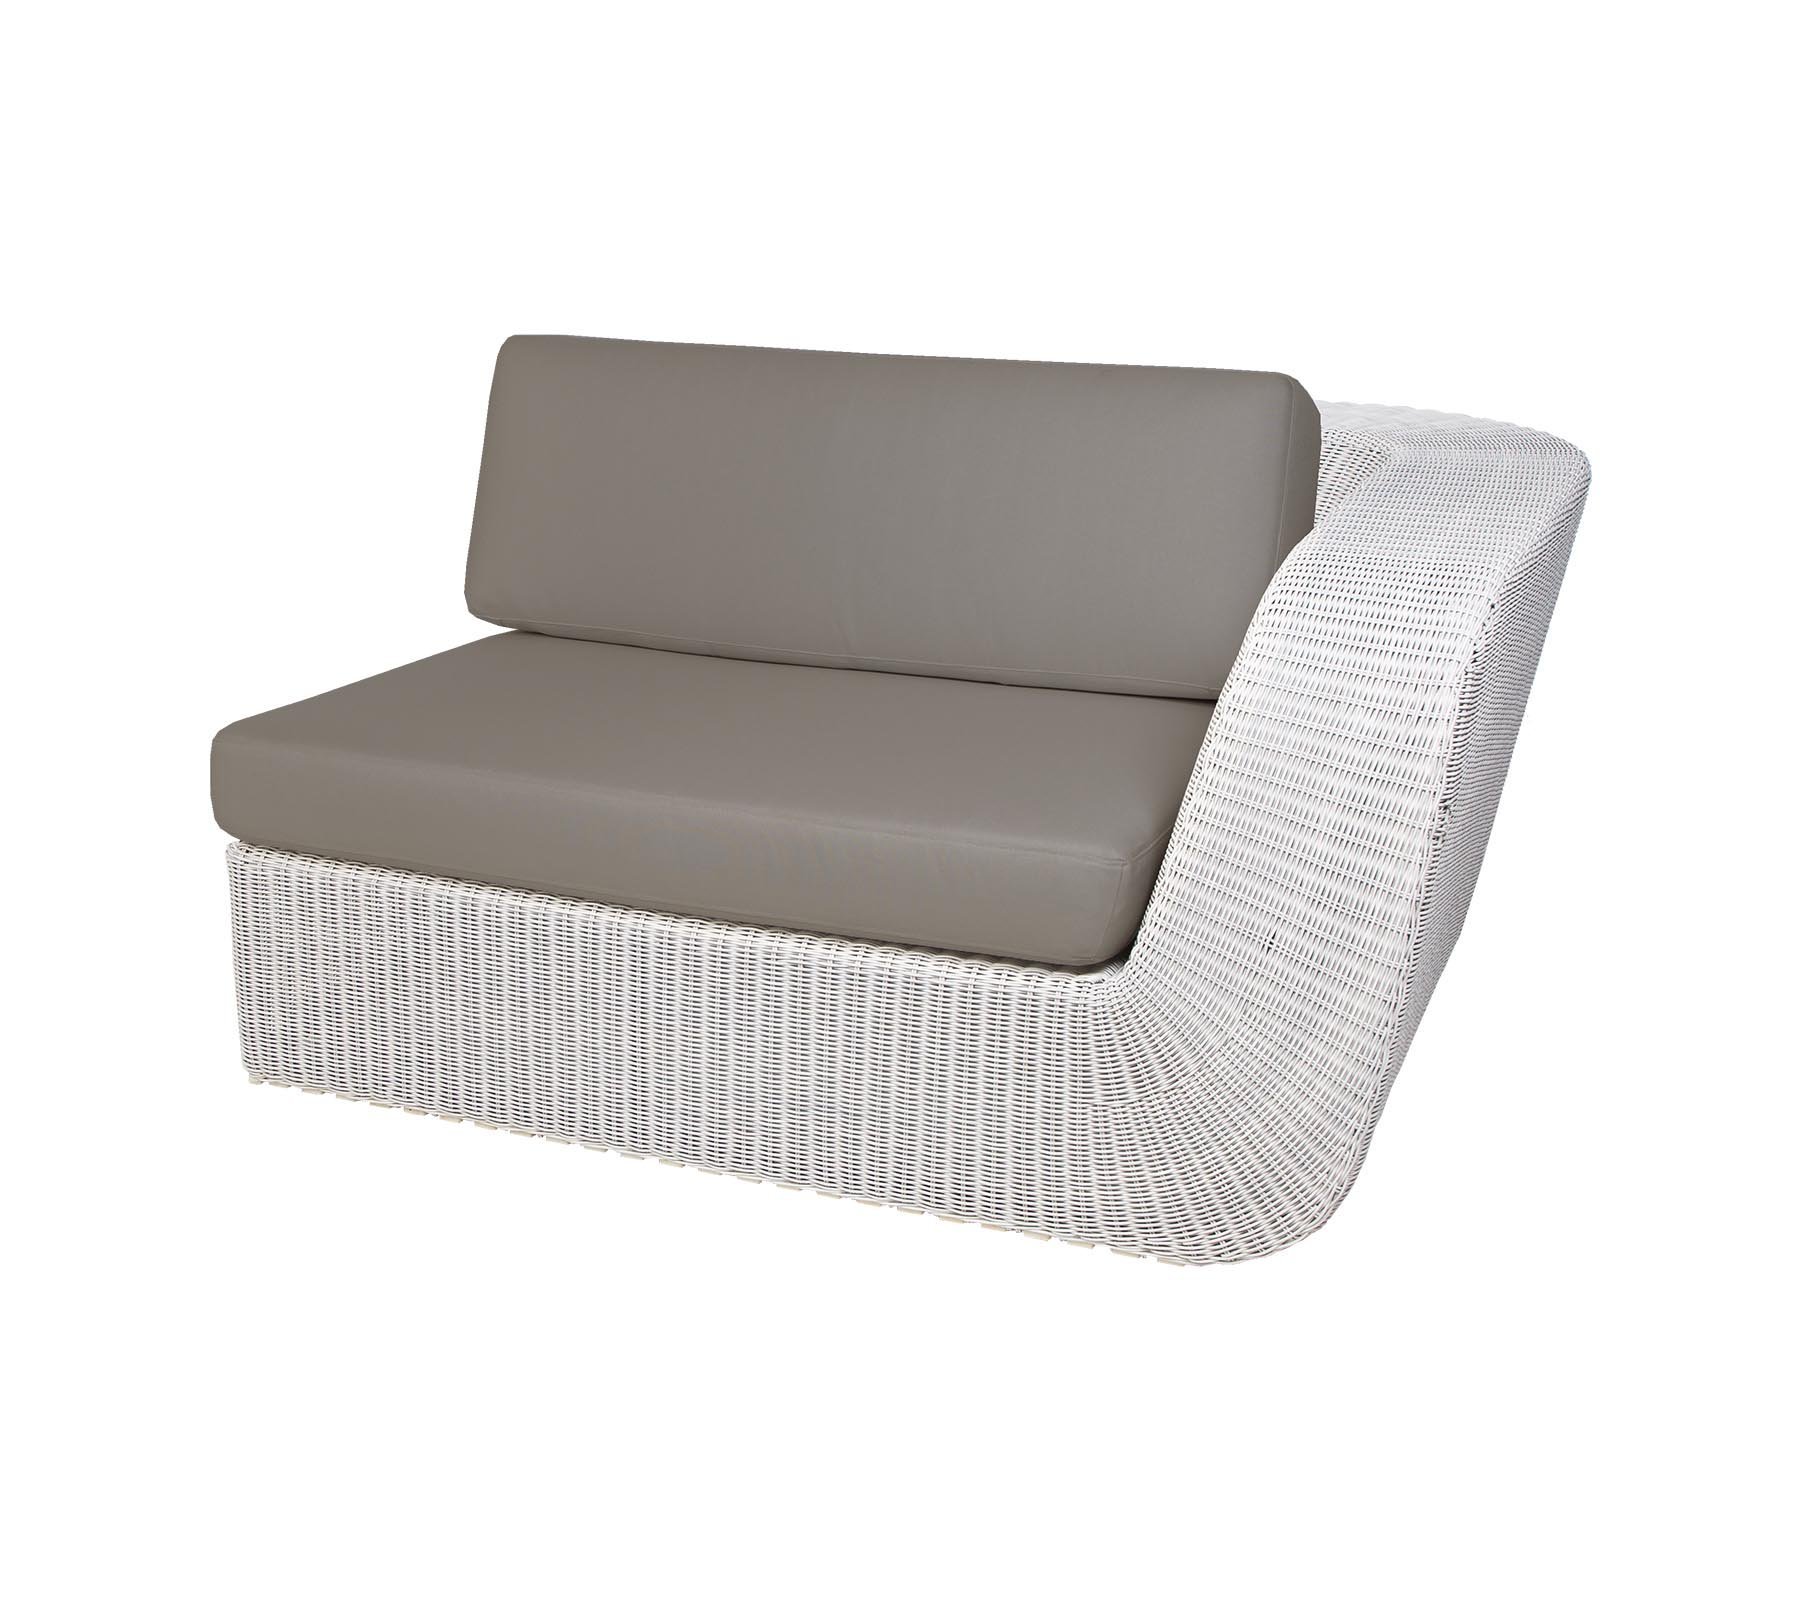 Cane-line Savannah 2-Seater Sofa | Wooden | Outdoor-Patio Furniture ...